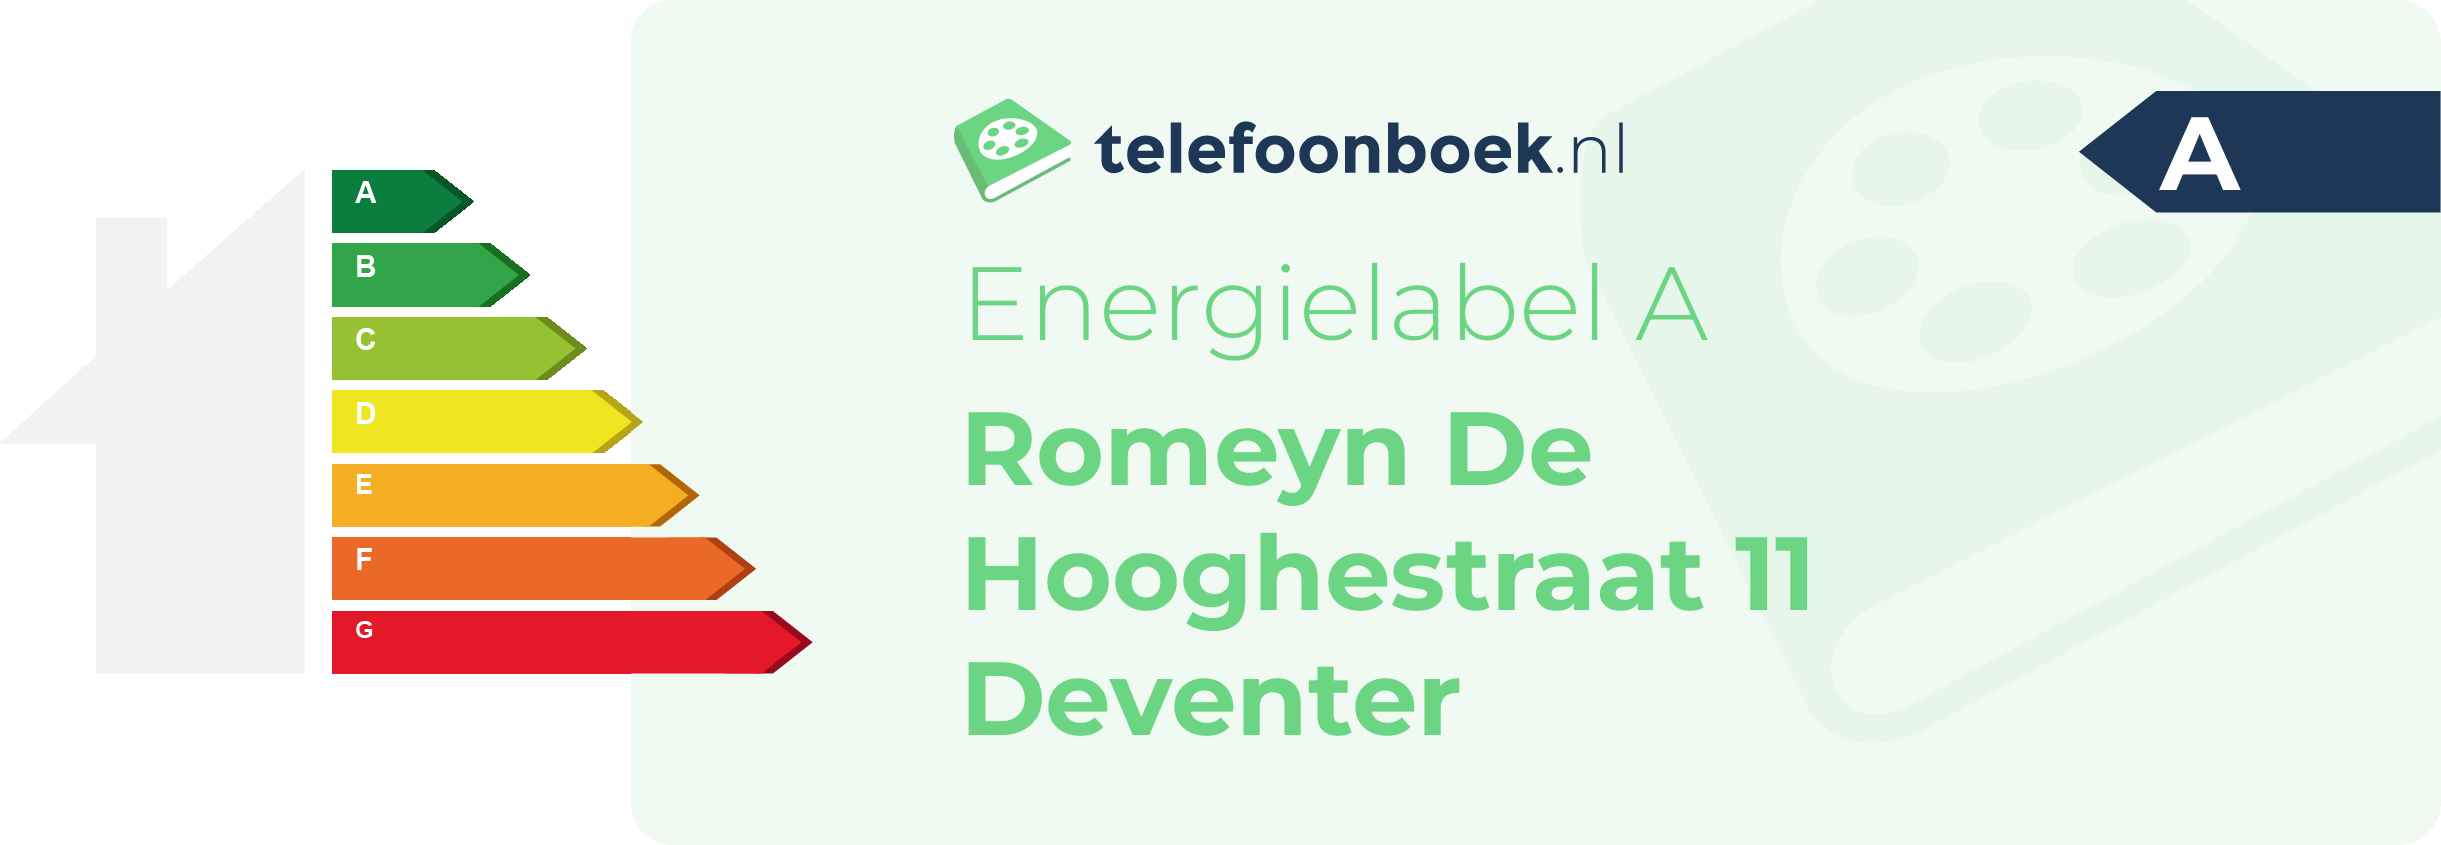 Energielabel Romeyn De Hooghestraat 11 Deventer